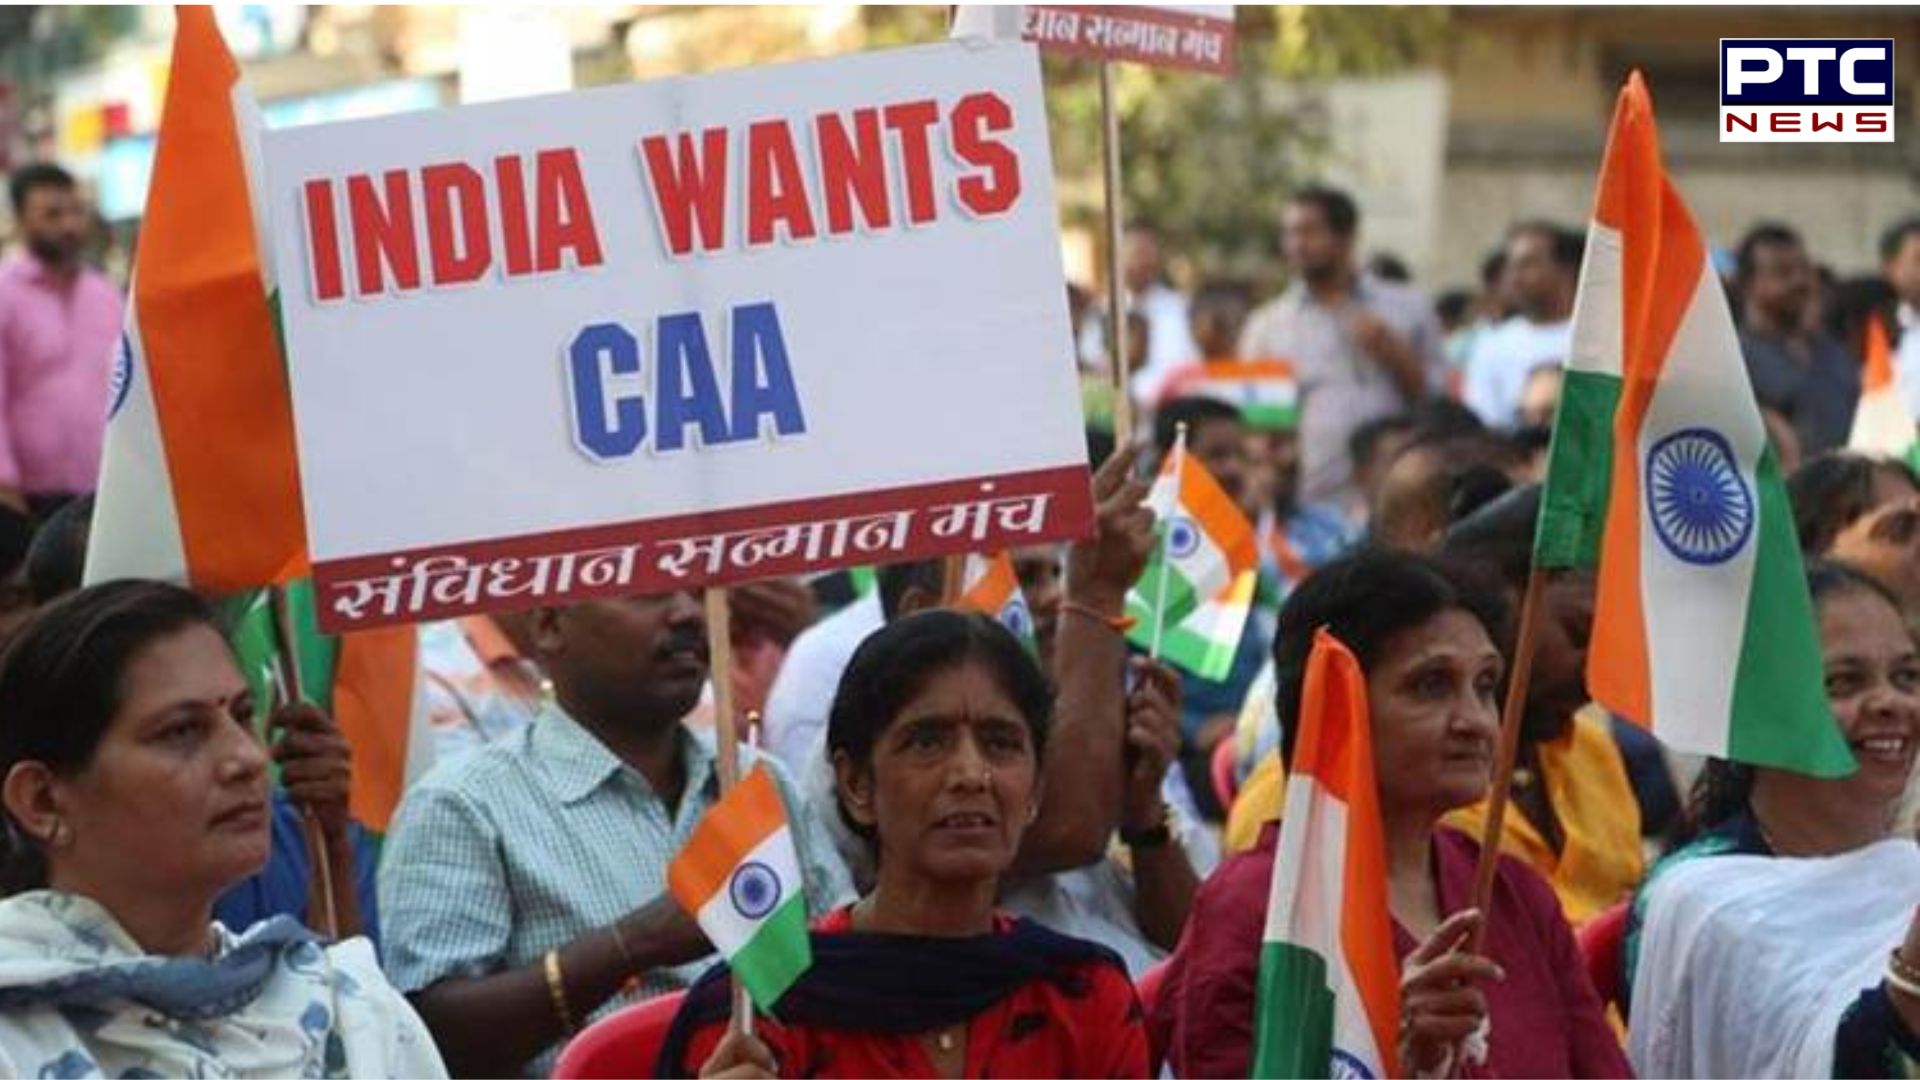 Congress, TMC slam Modi government, question CAA rules notification timing